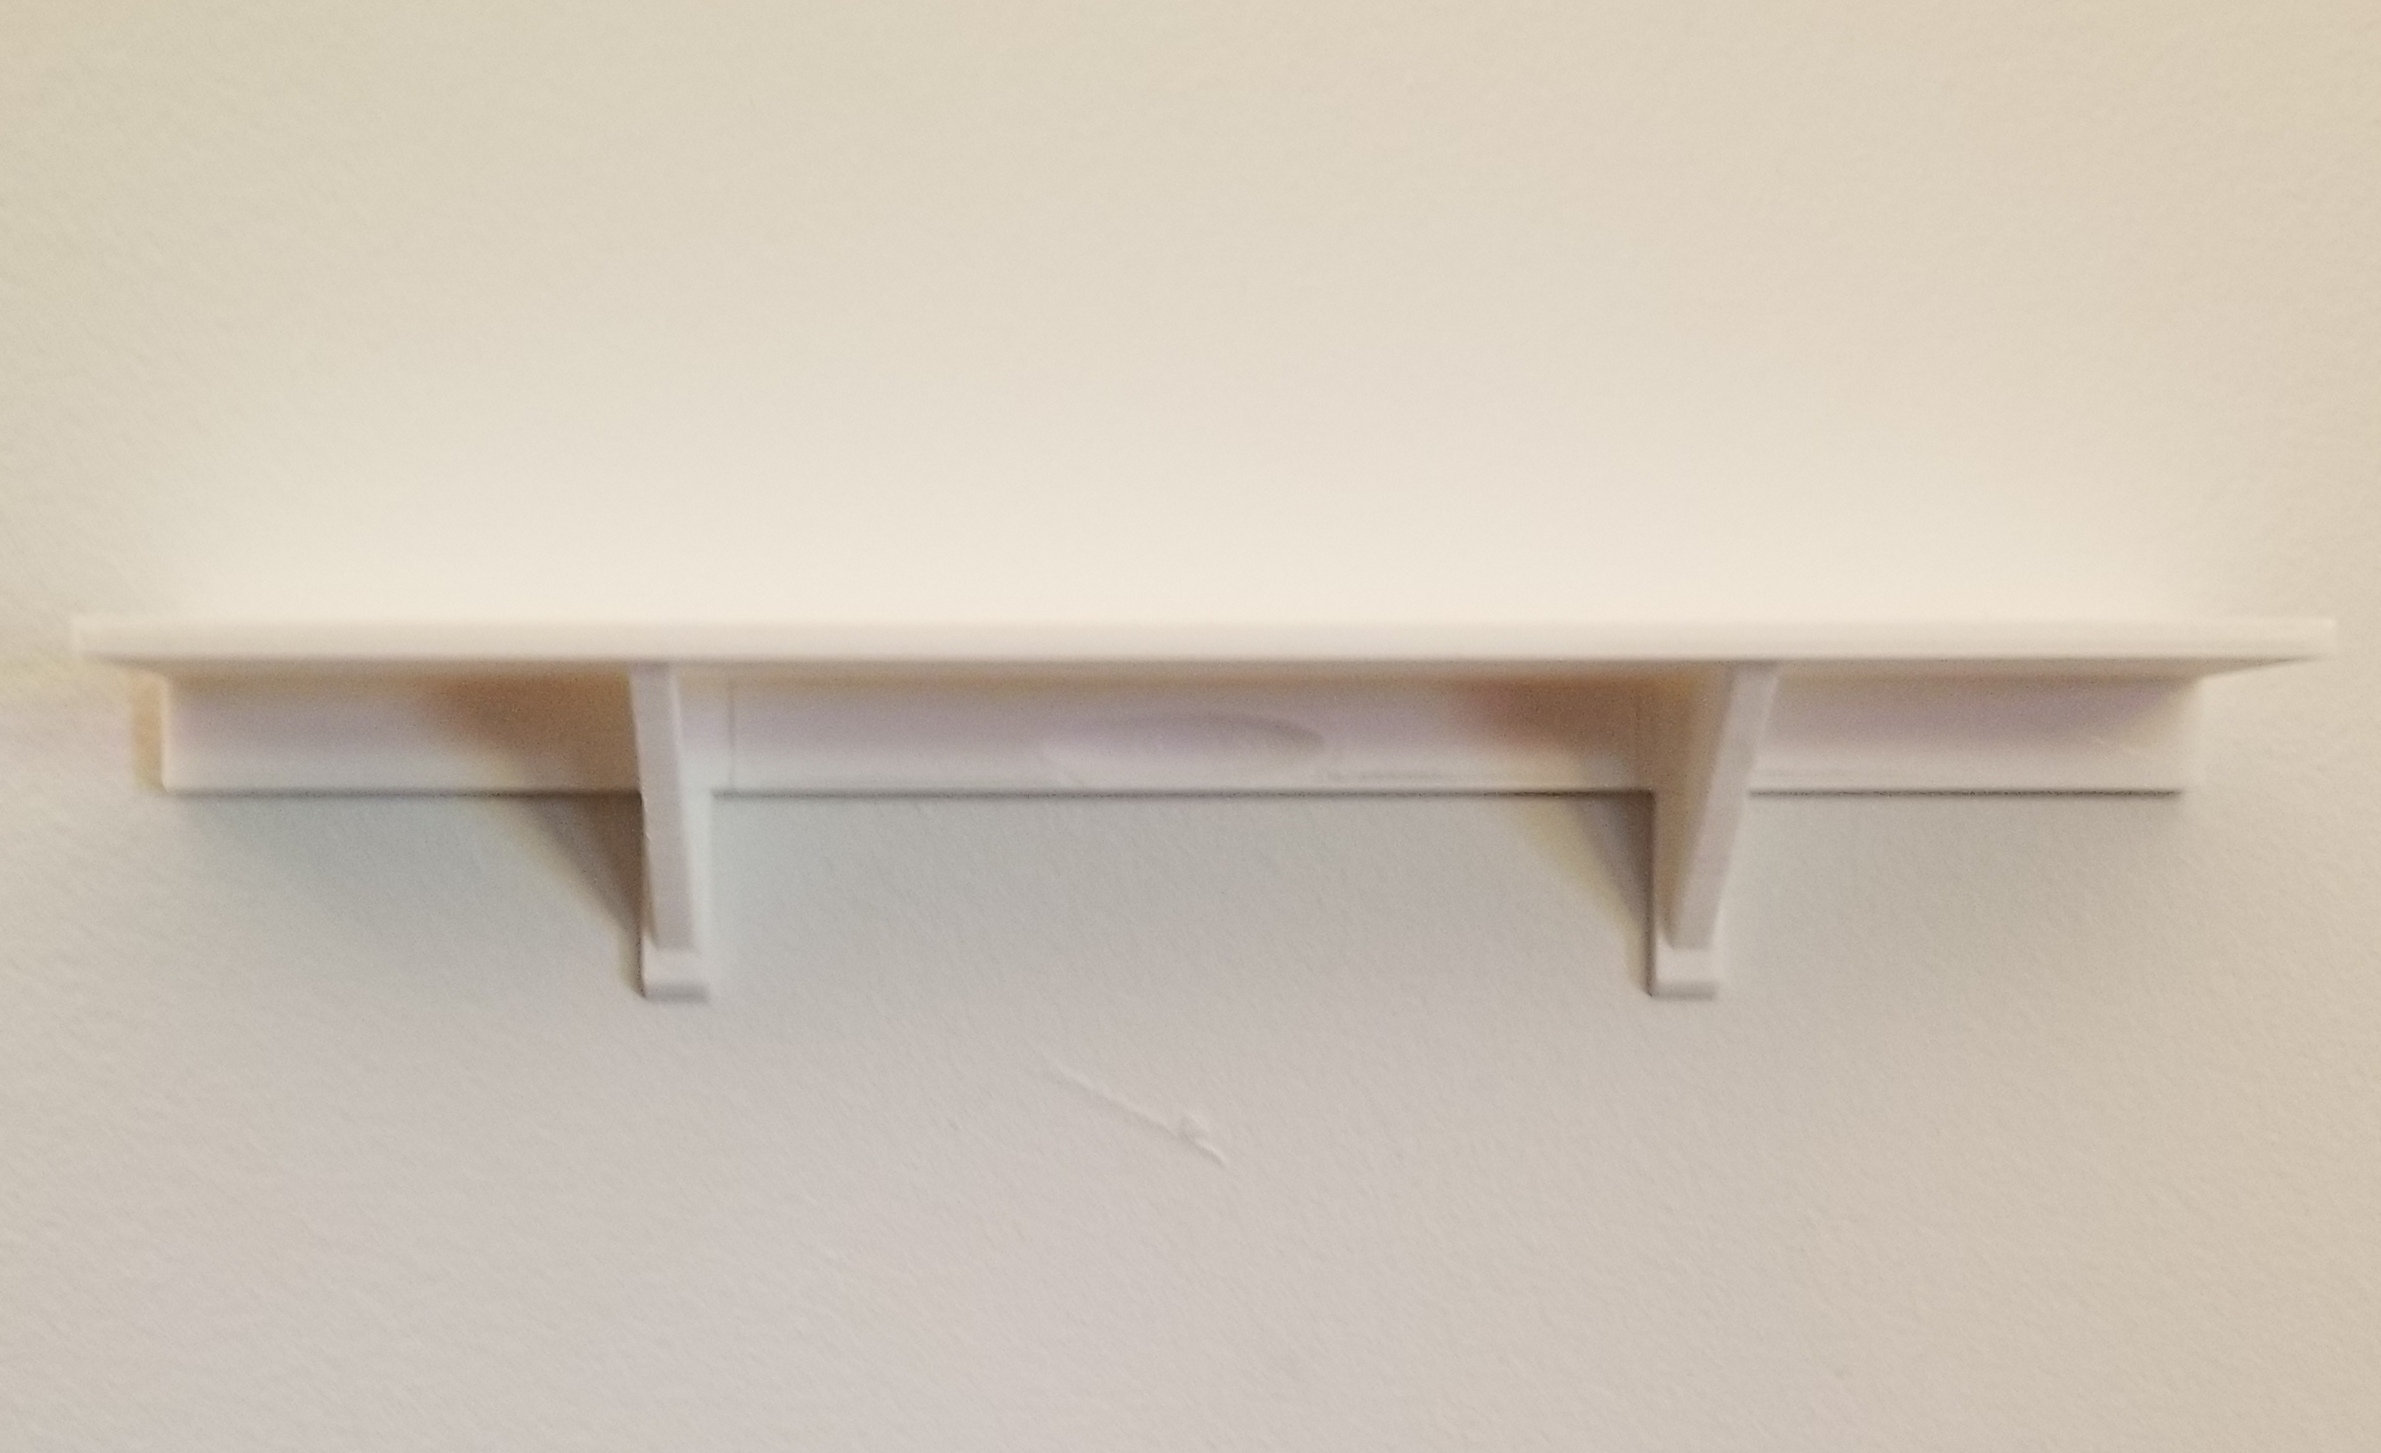 12 x 2 White Wall Shelf Easy No Hole No Nail install uses 3M Command  Strips